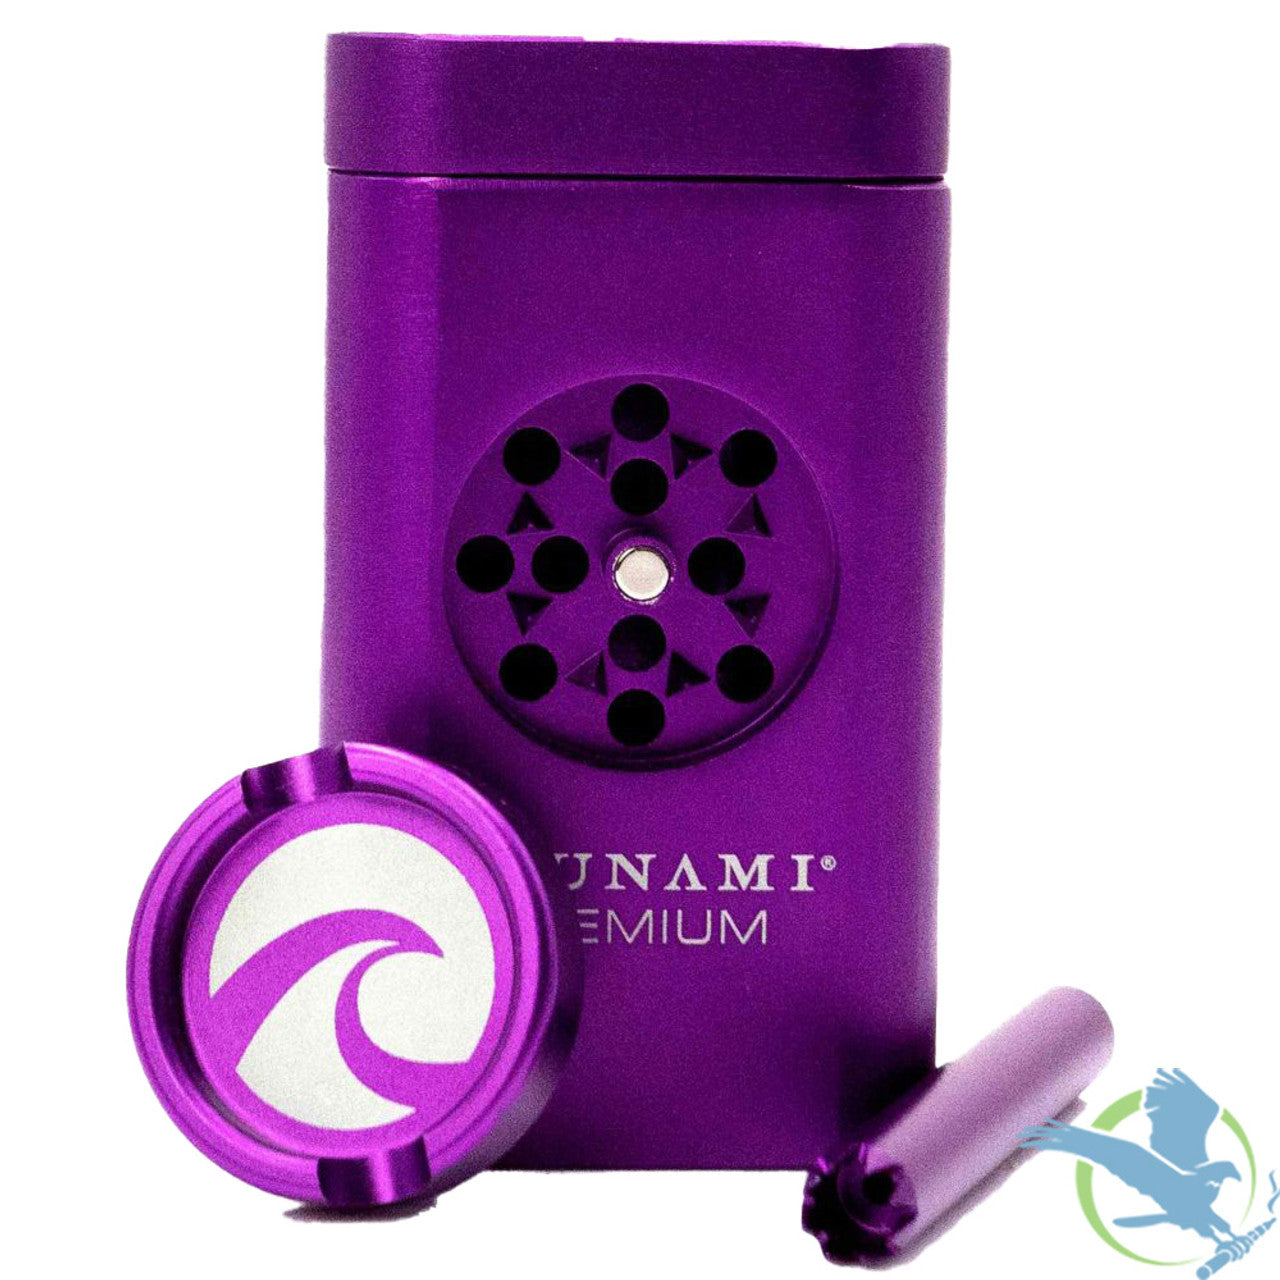 TSUNAMI Premium Dugout